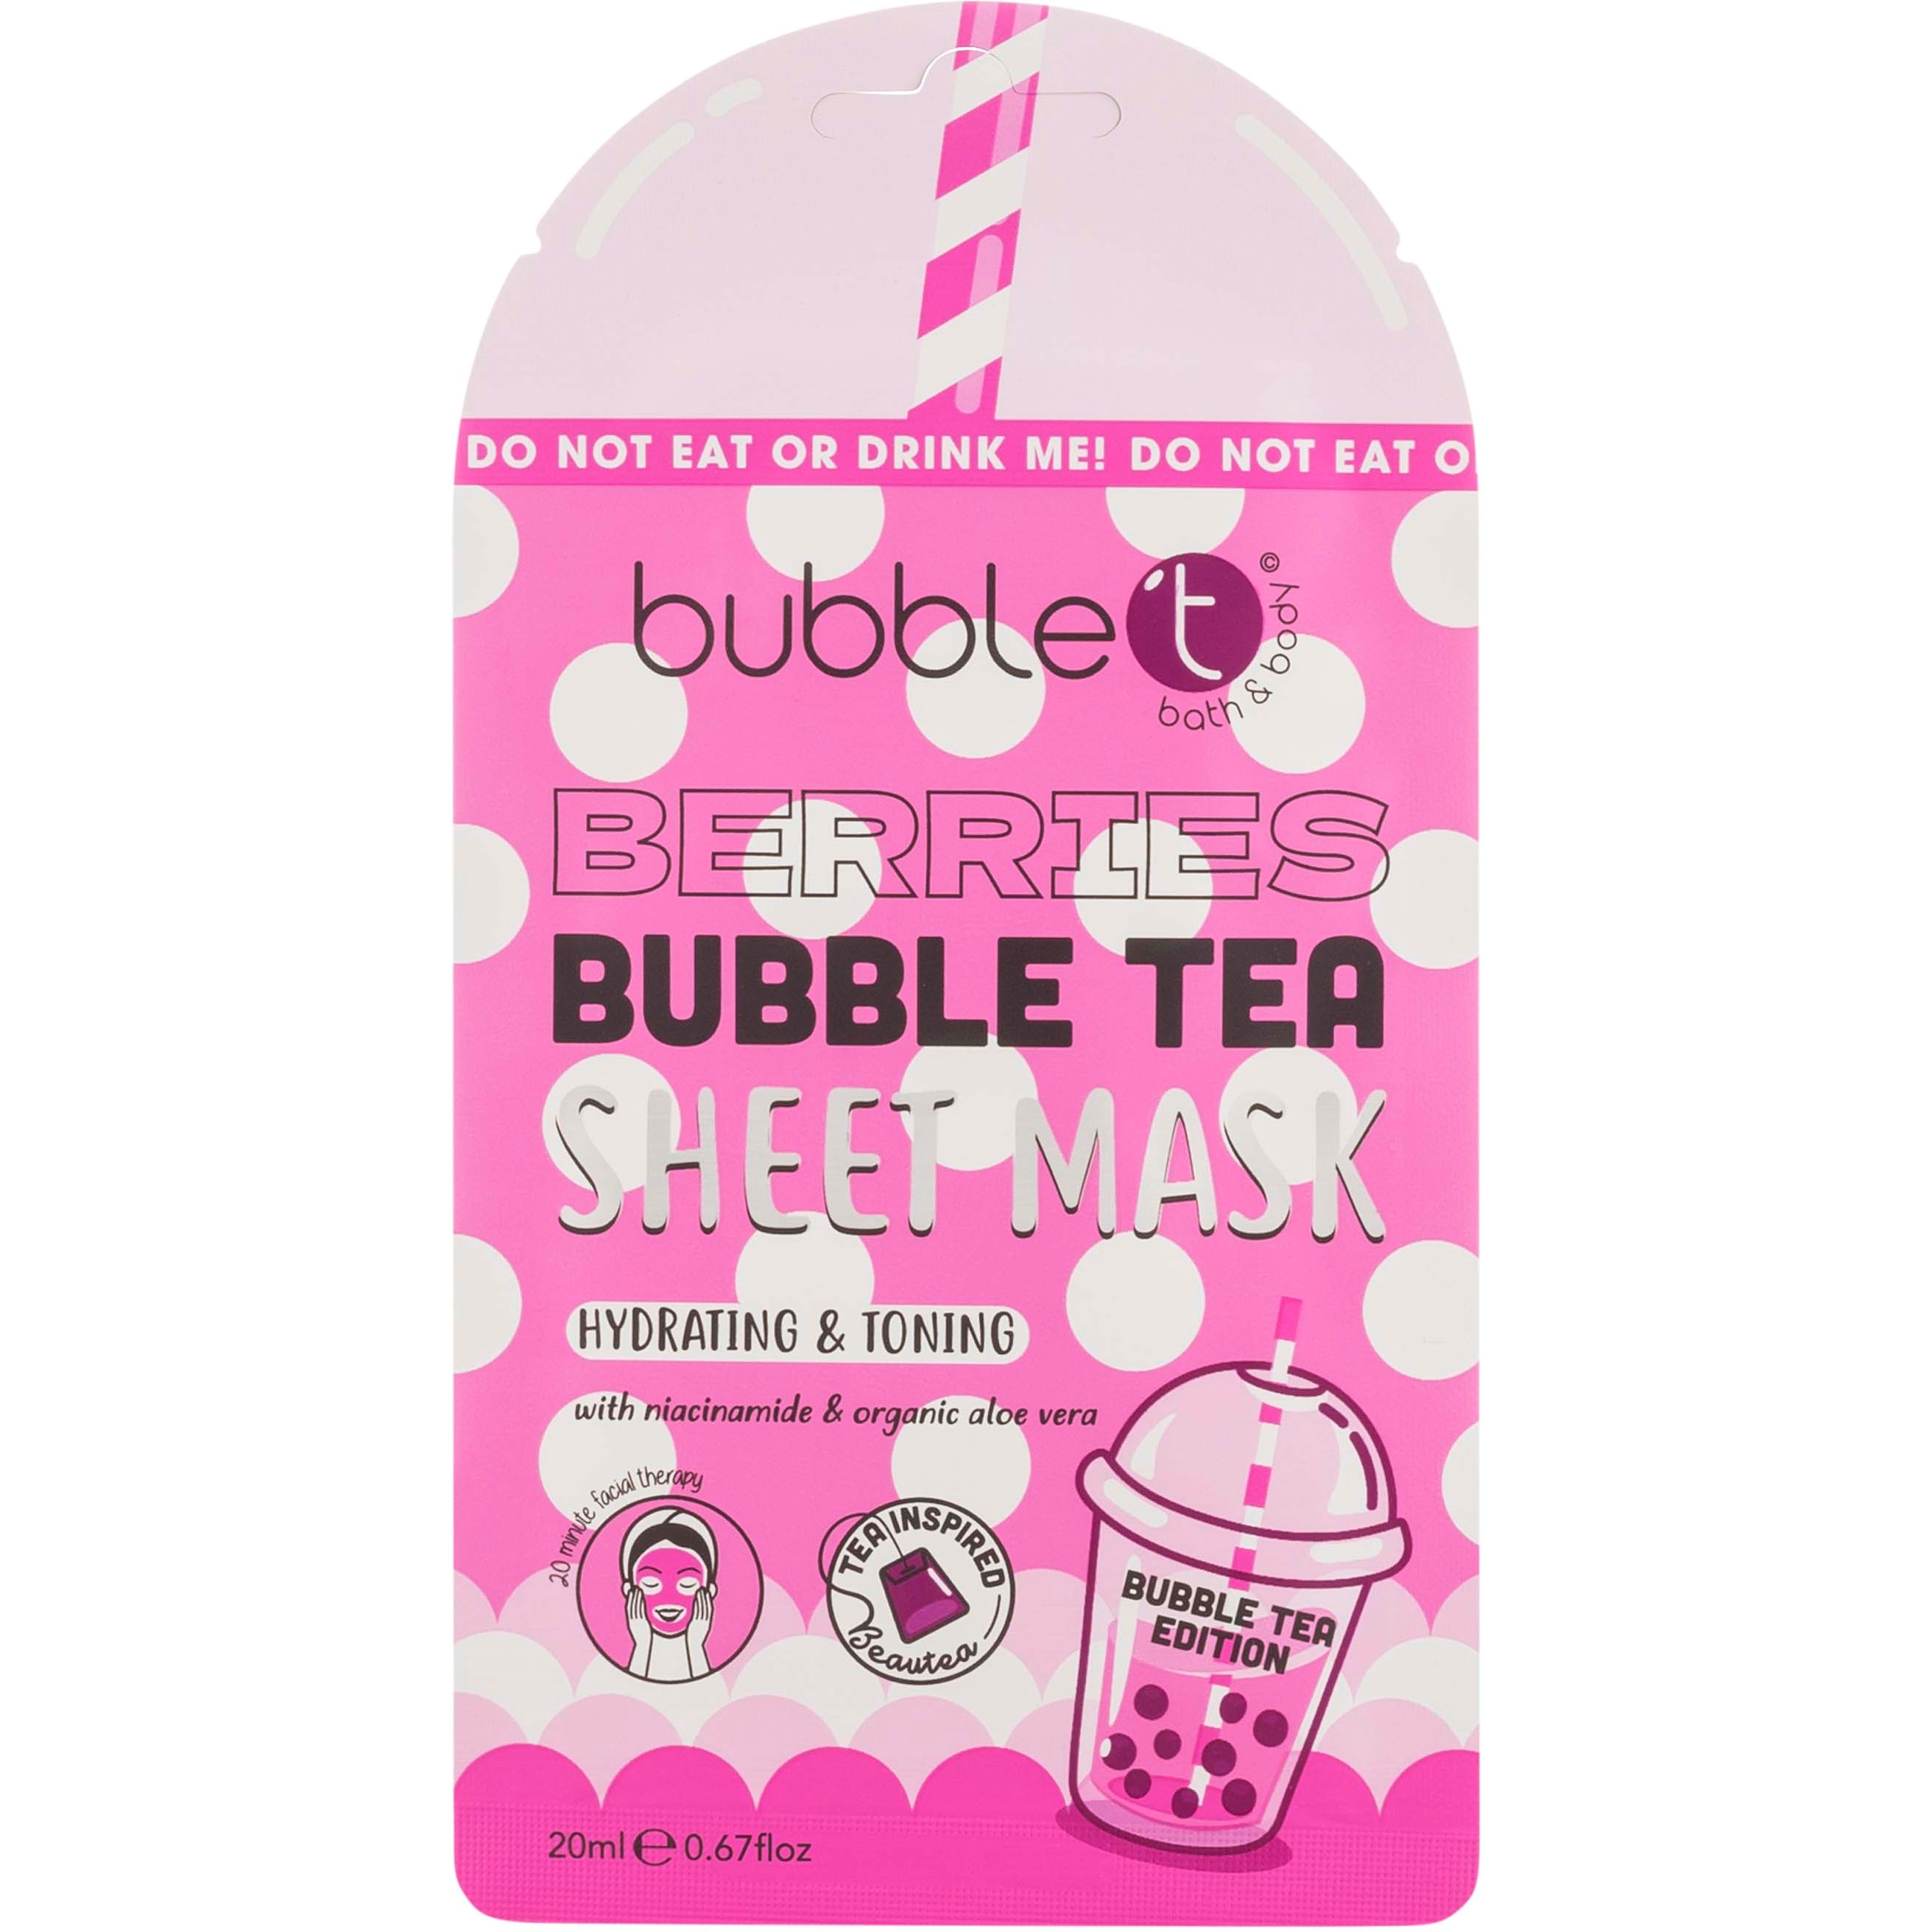 BubbleT Bubble Tea Sheet Mask Berries